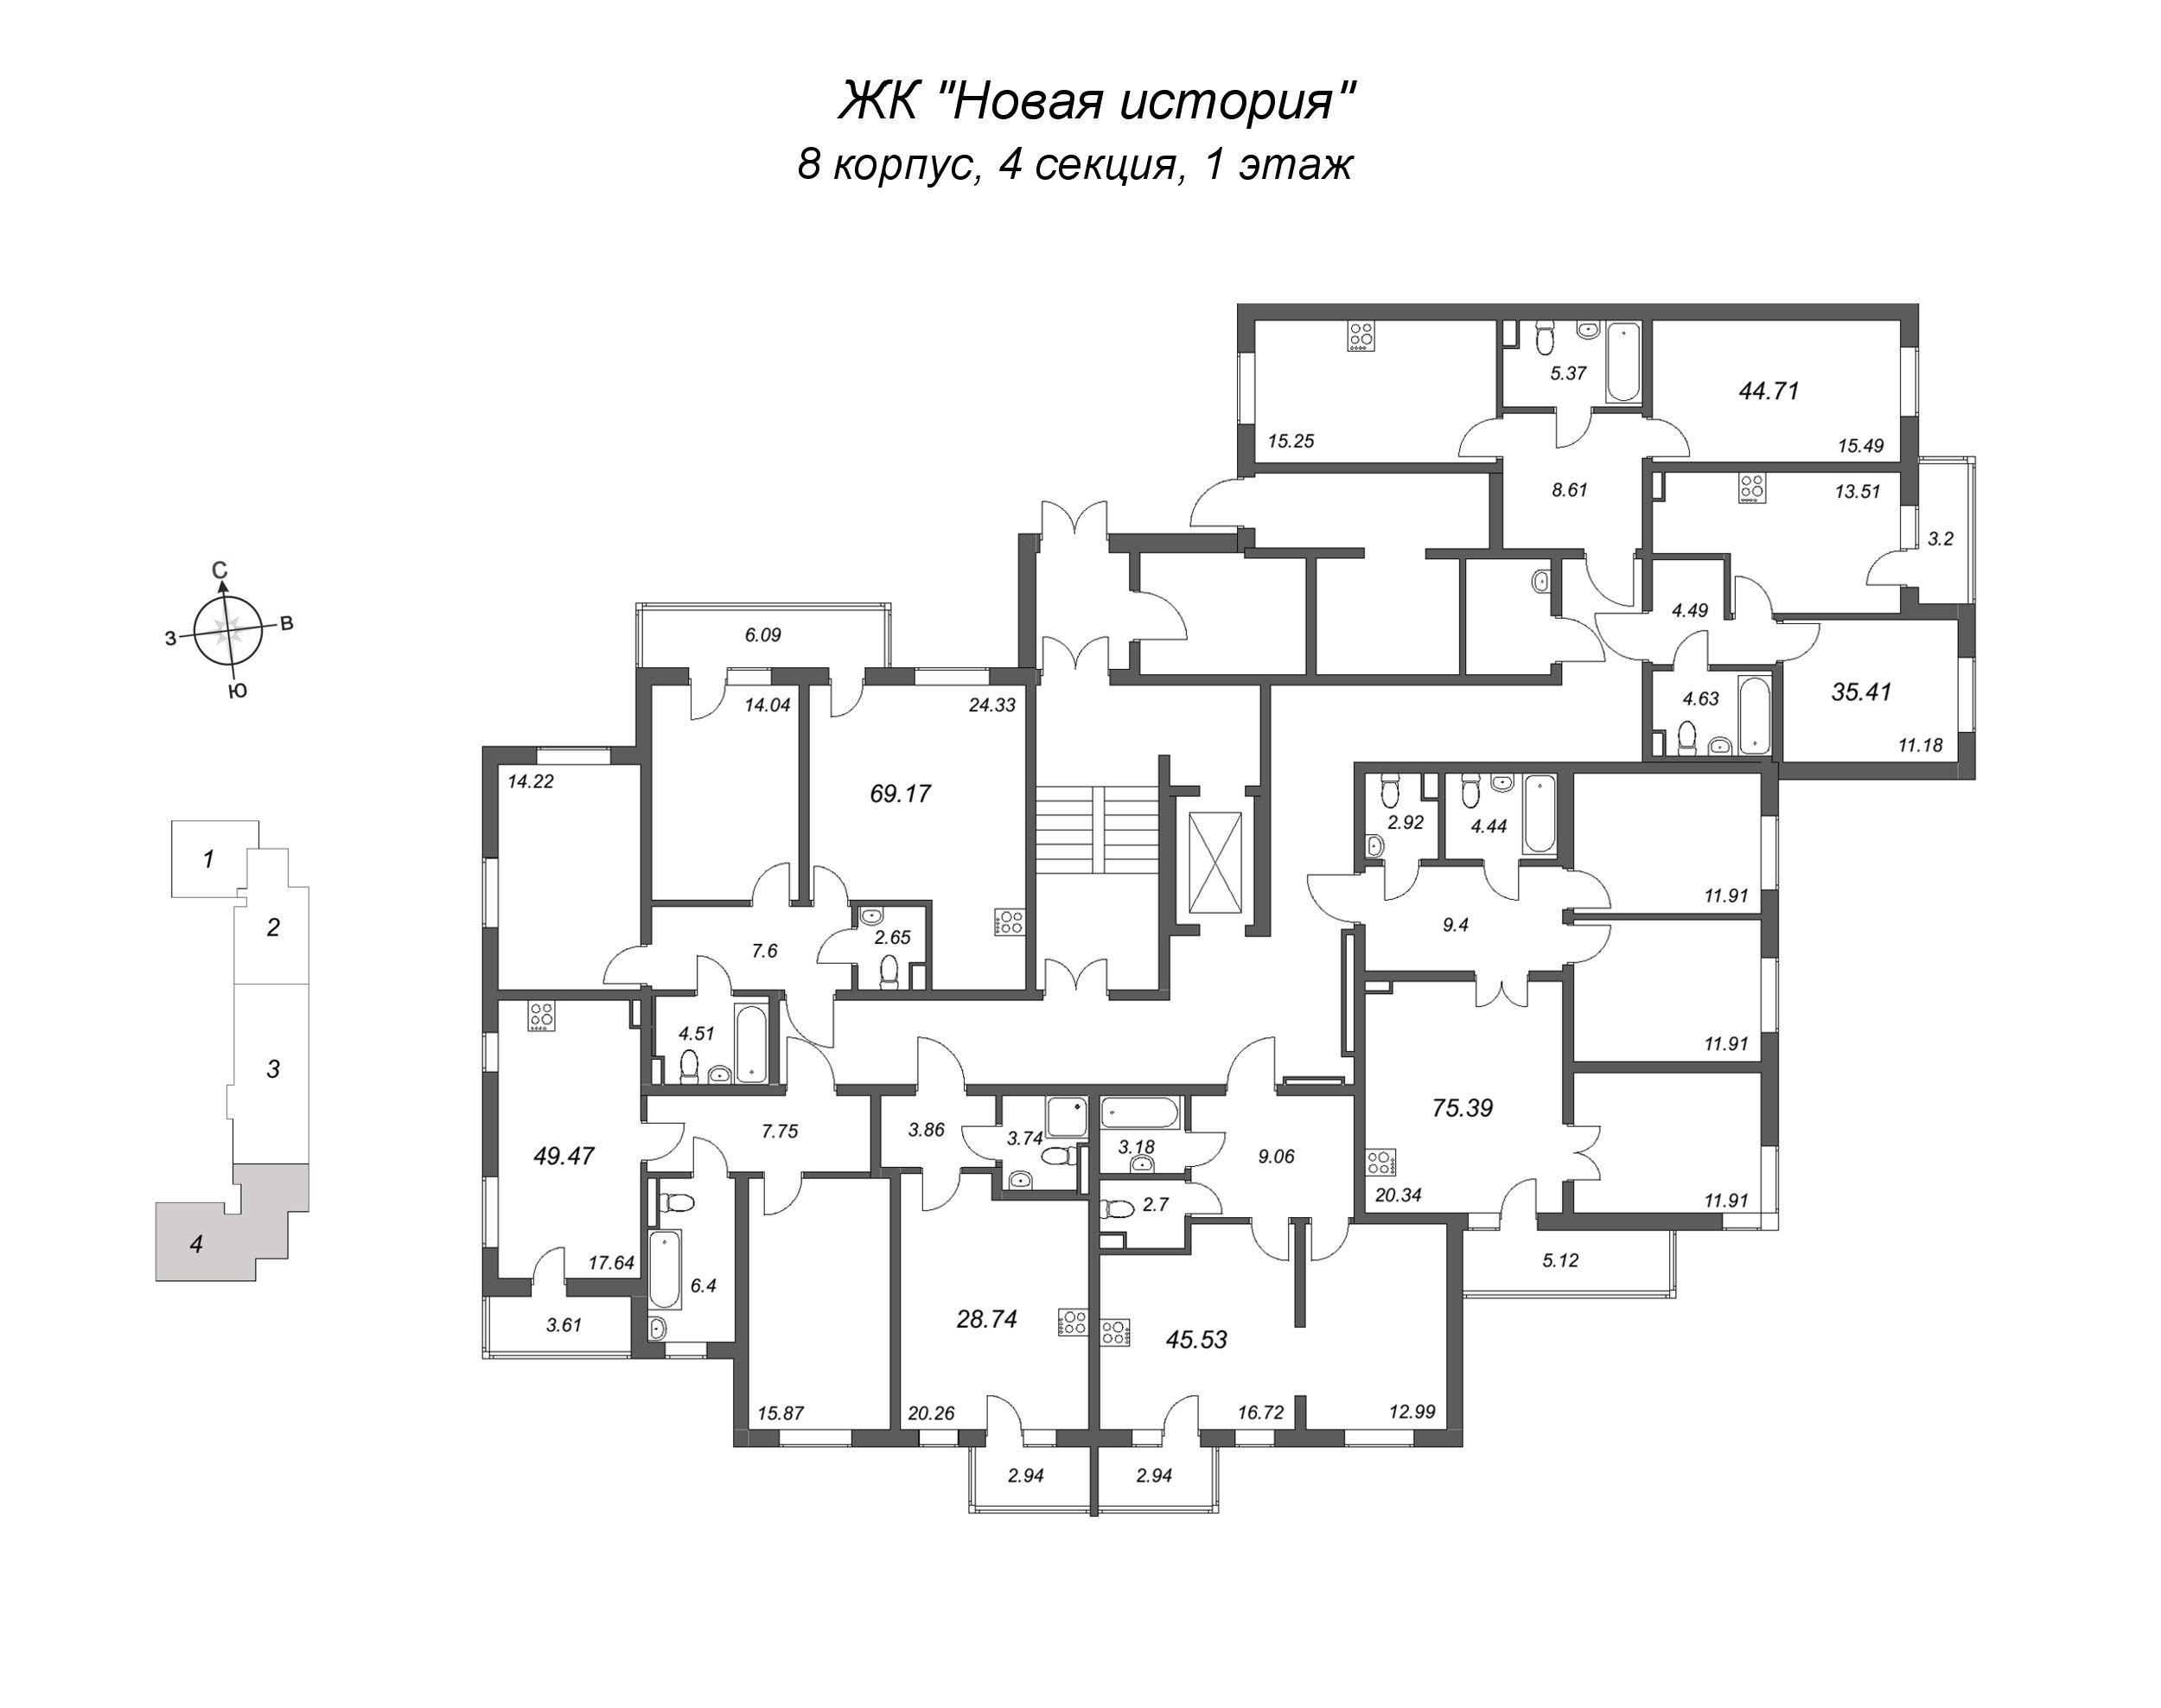 4-комнатная (Евро) квартира, 75.39 м² - планировка этажа